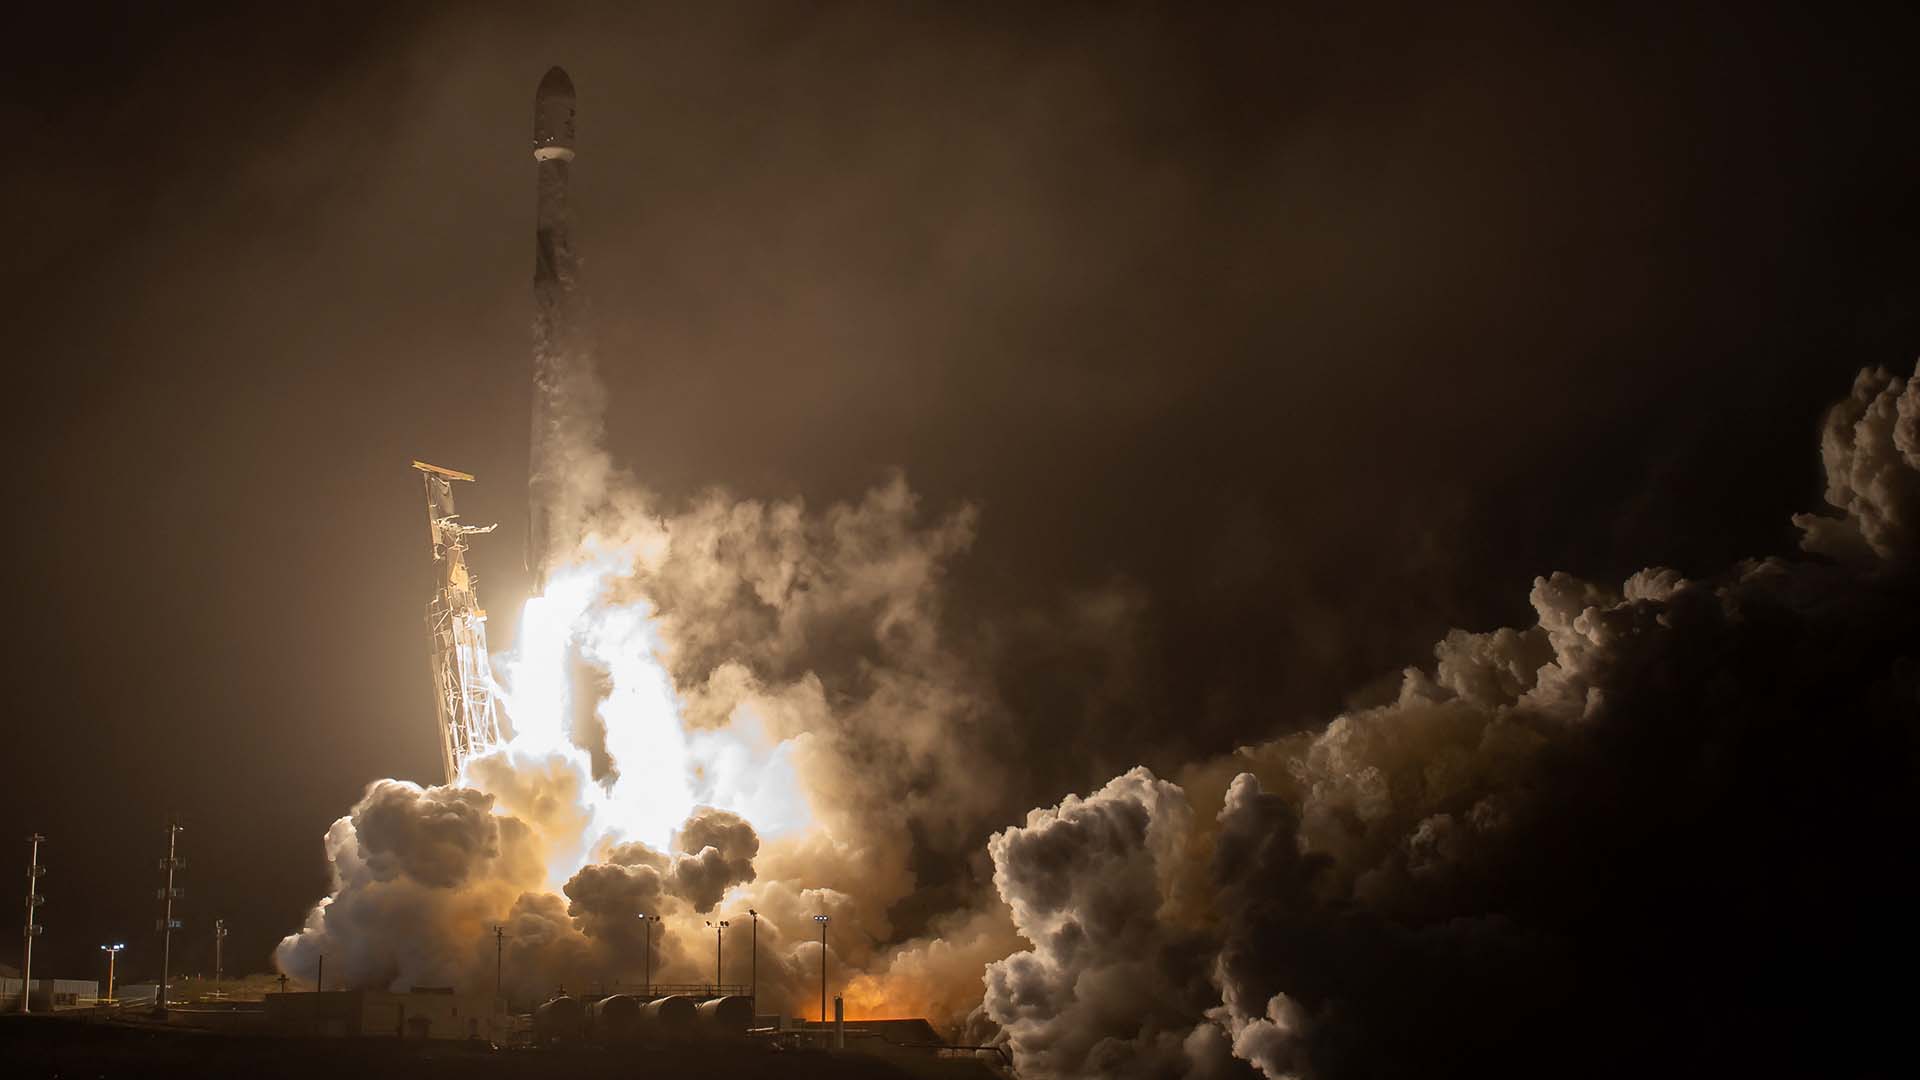 17 New Authentic SpaceX Telstar 18 Vantage Mission Patch quantity 